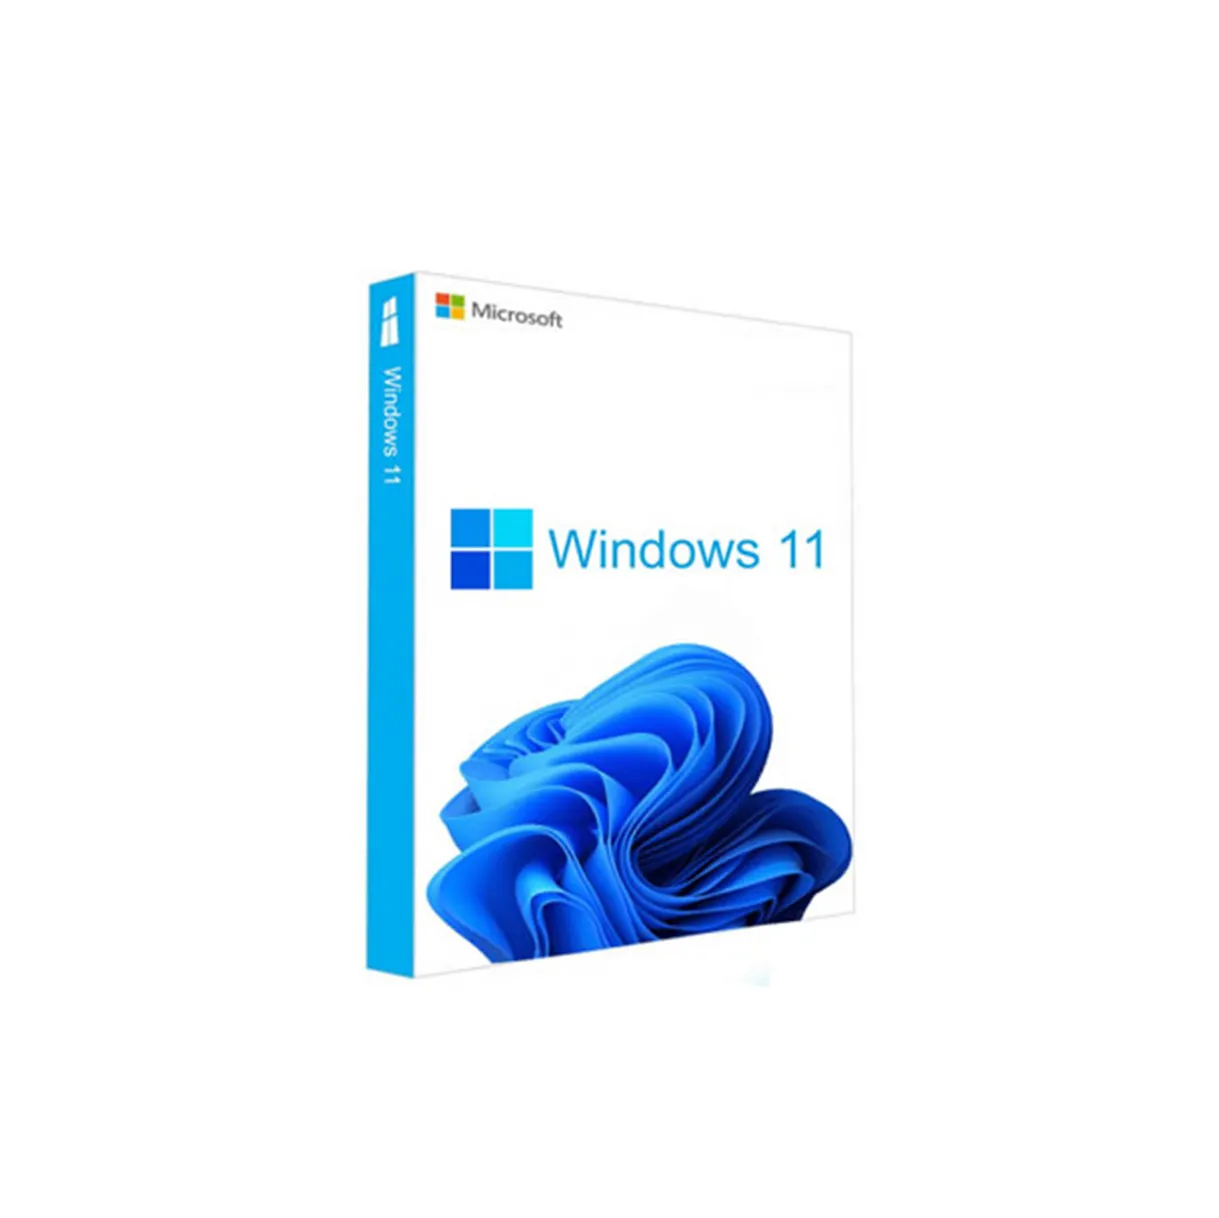 Windows 11 Pro Key Email Instant Delivery Global Online Activation Digital Genuine System Software